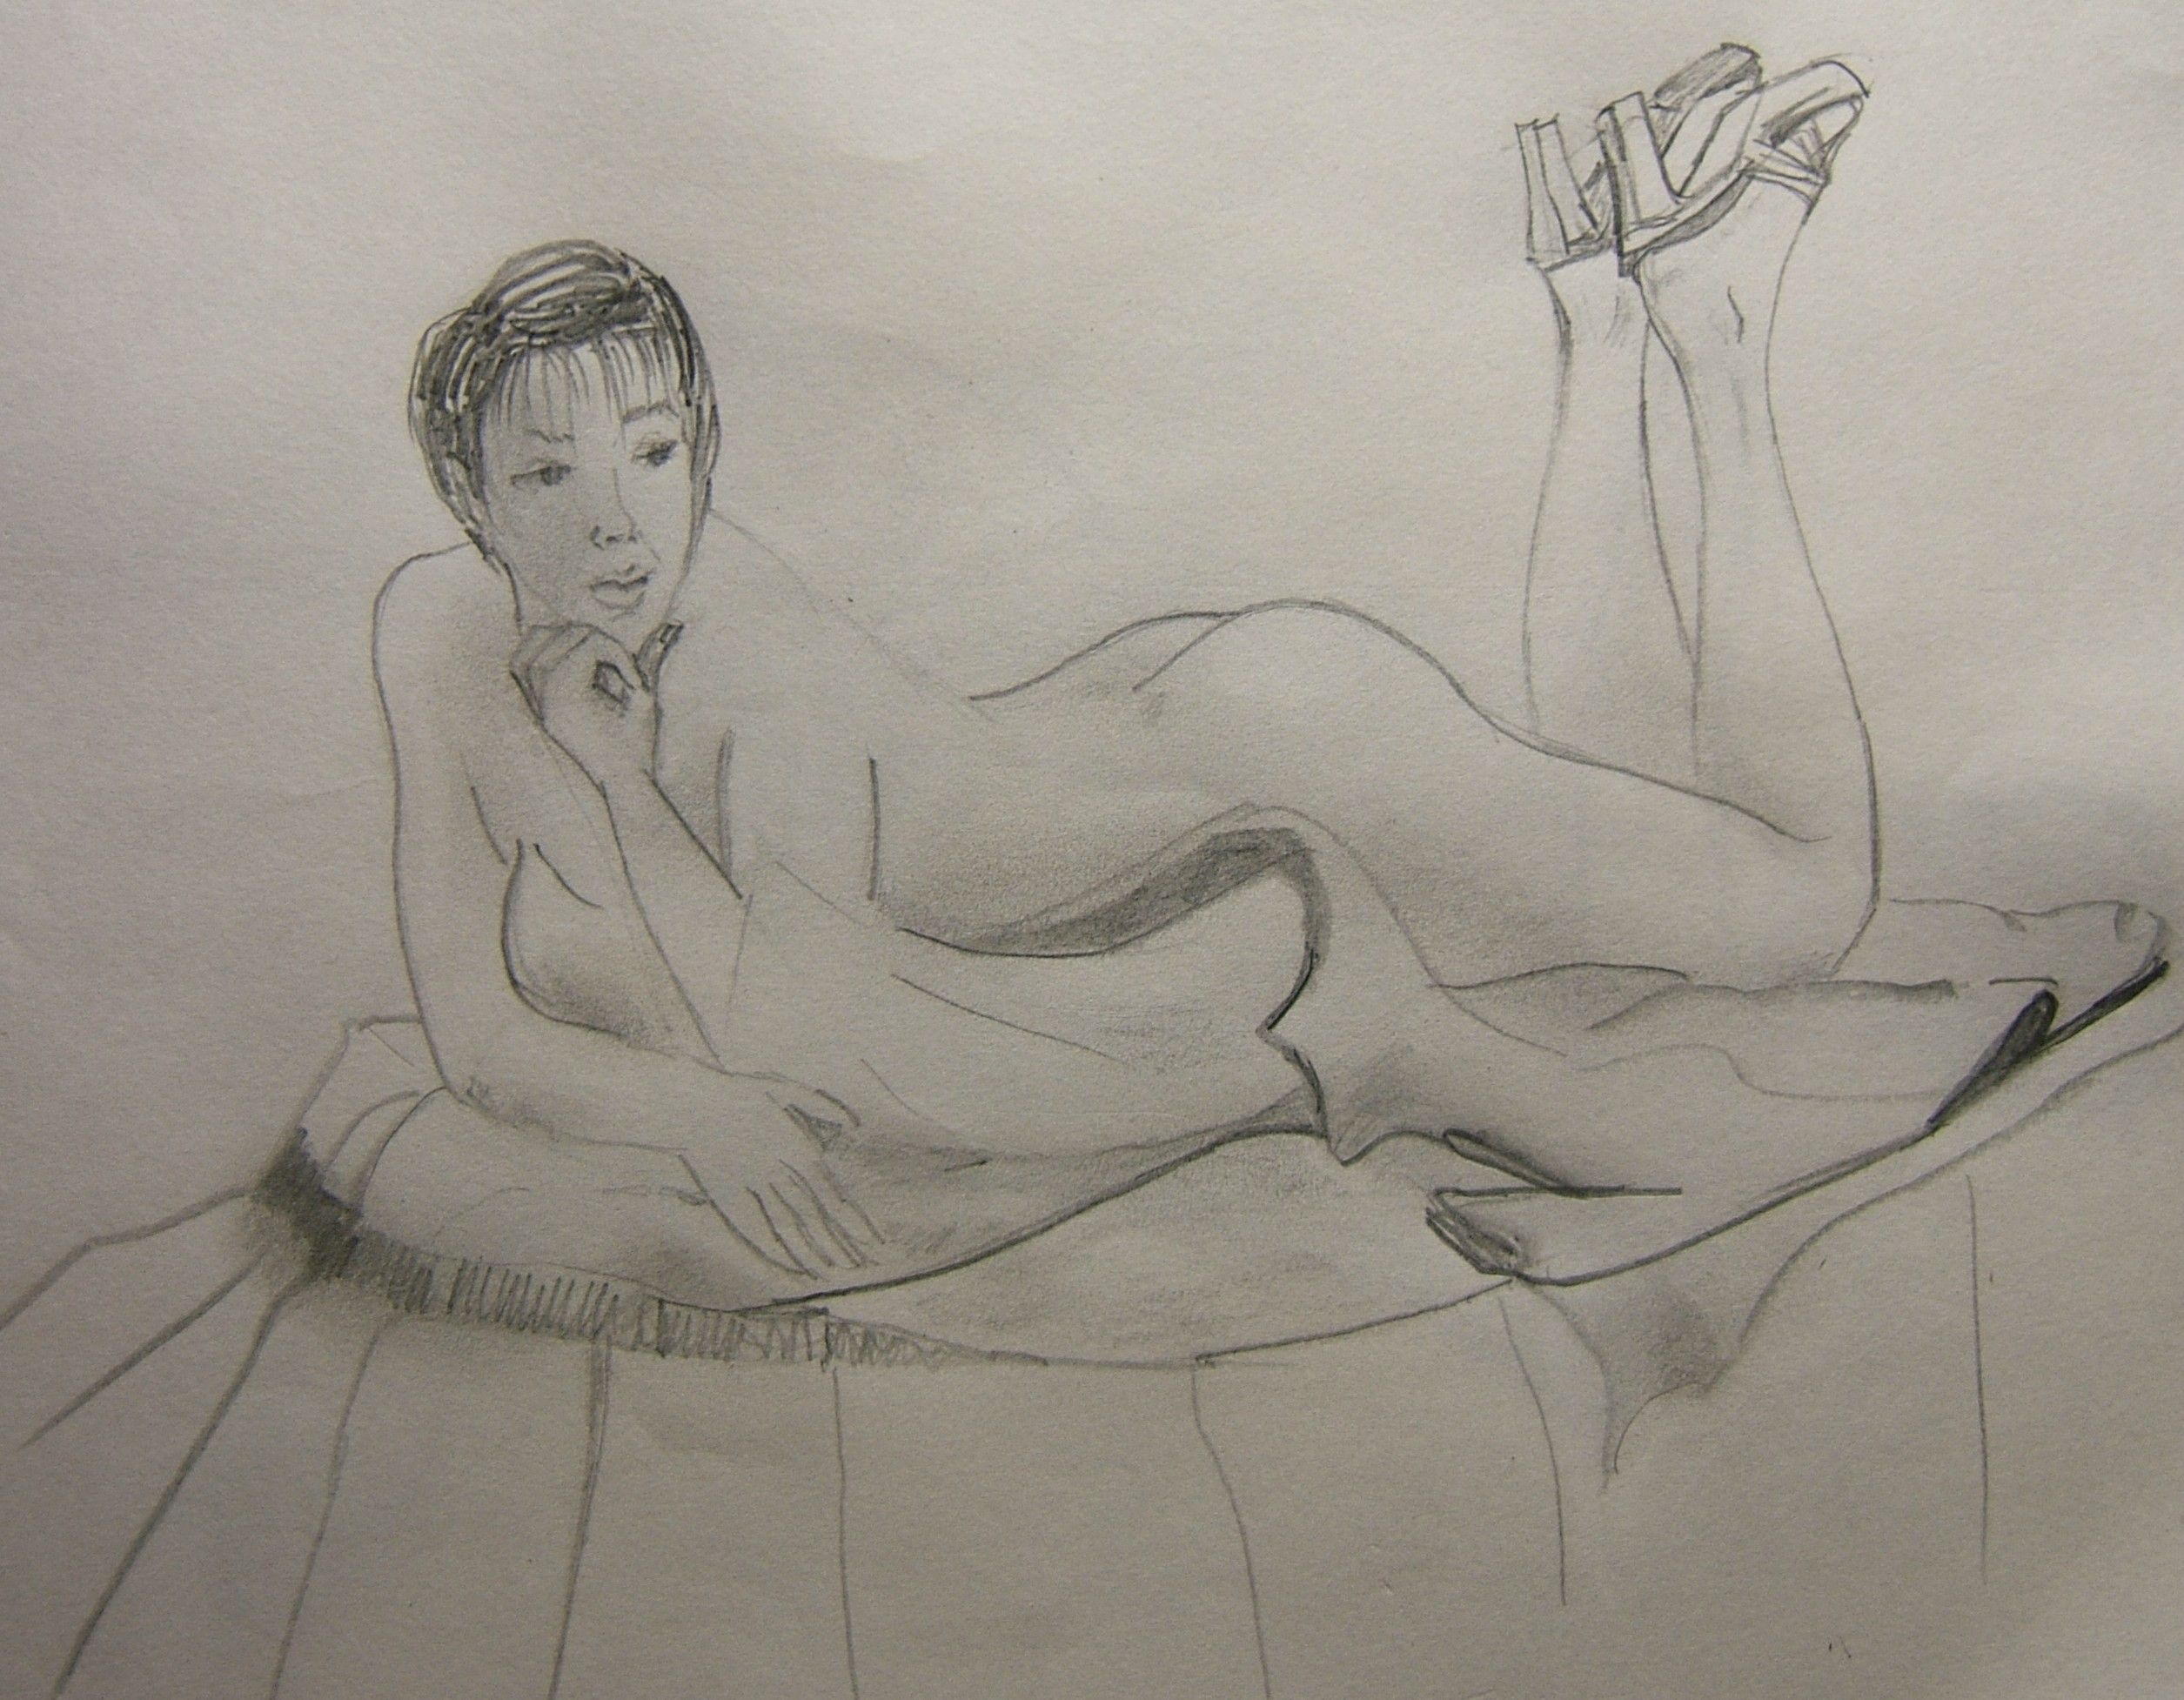 Nude model drawing